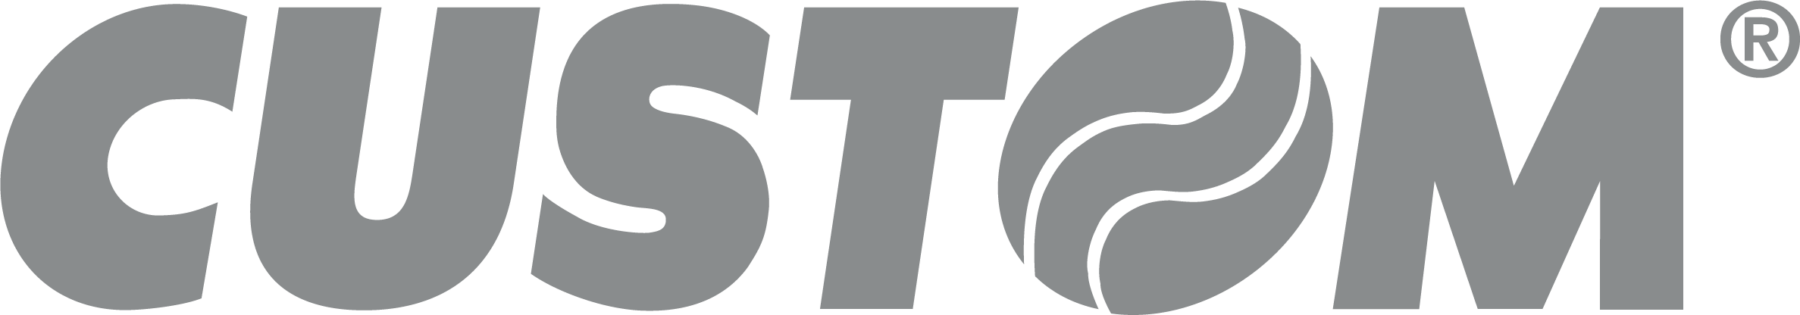 Logo-CUSTOM_877-C-13813